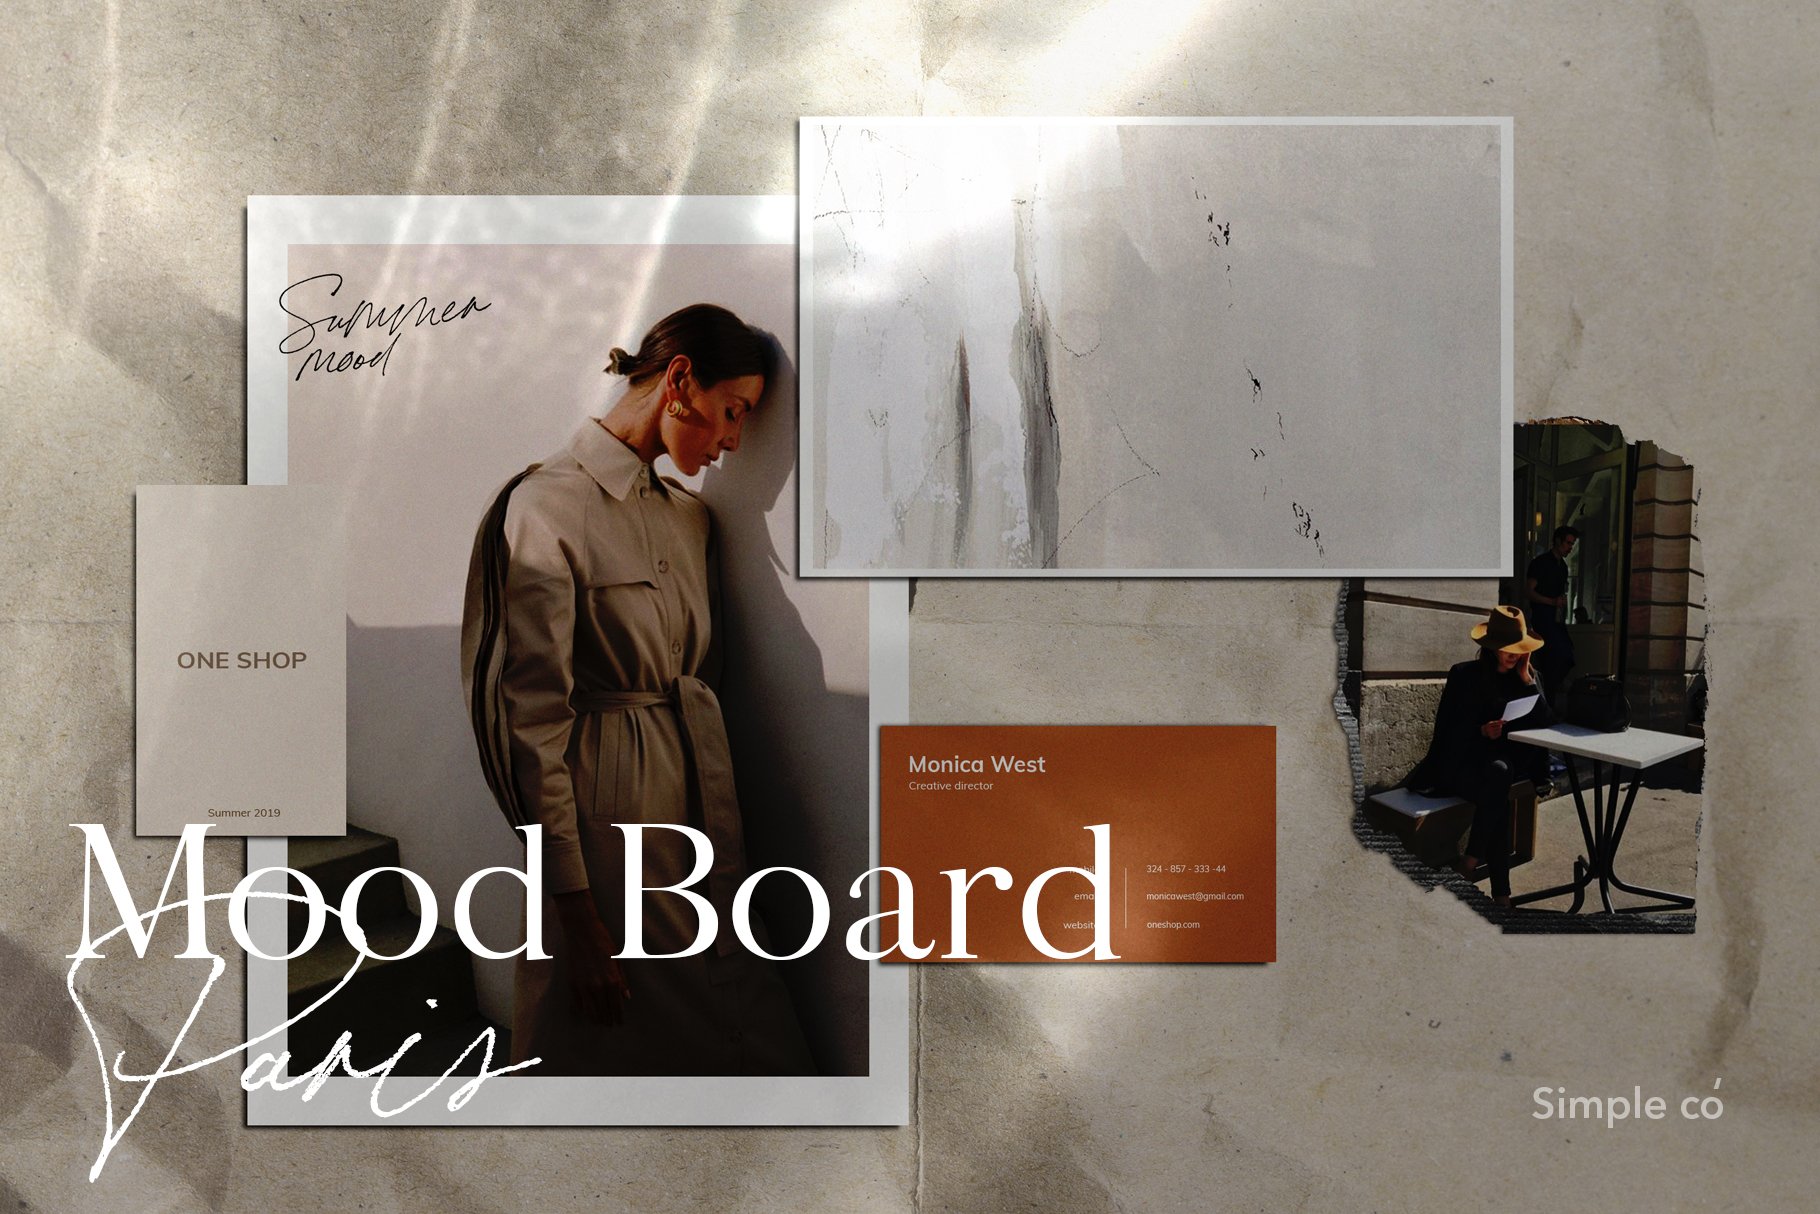 Mood Board Paris / Mockup cover image.